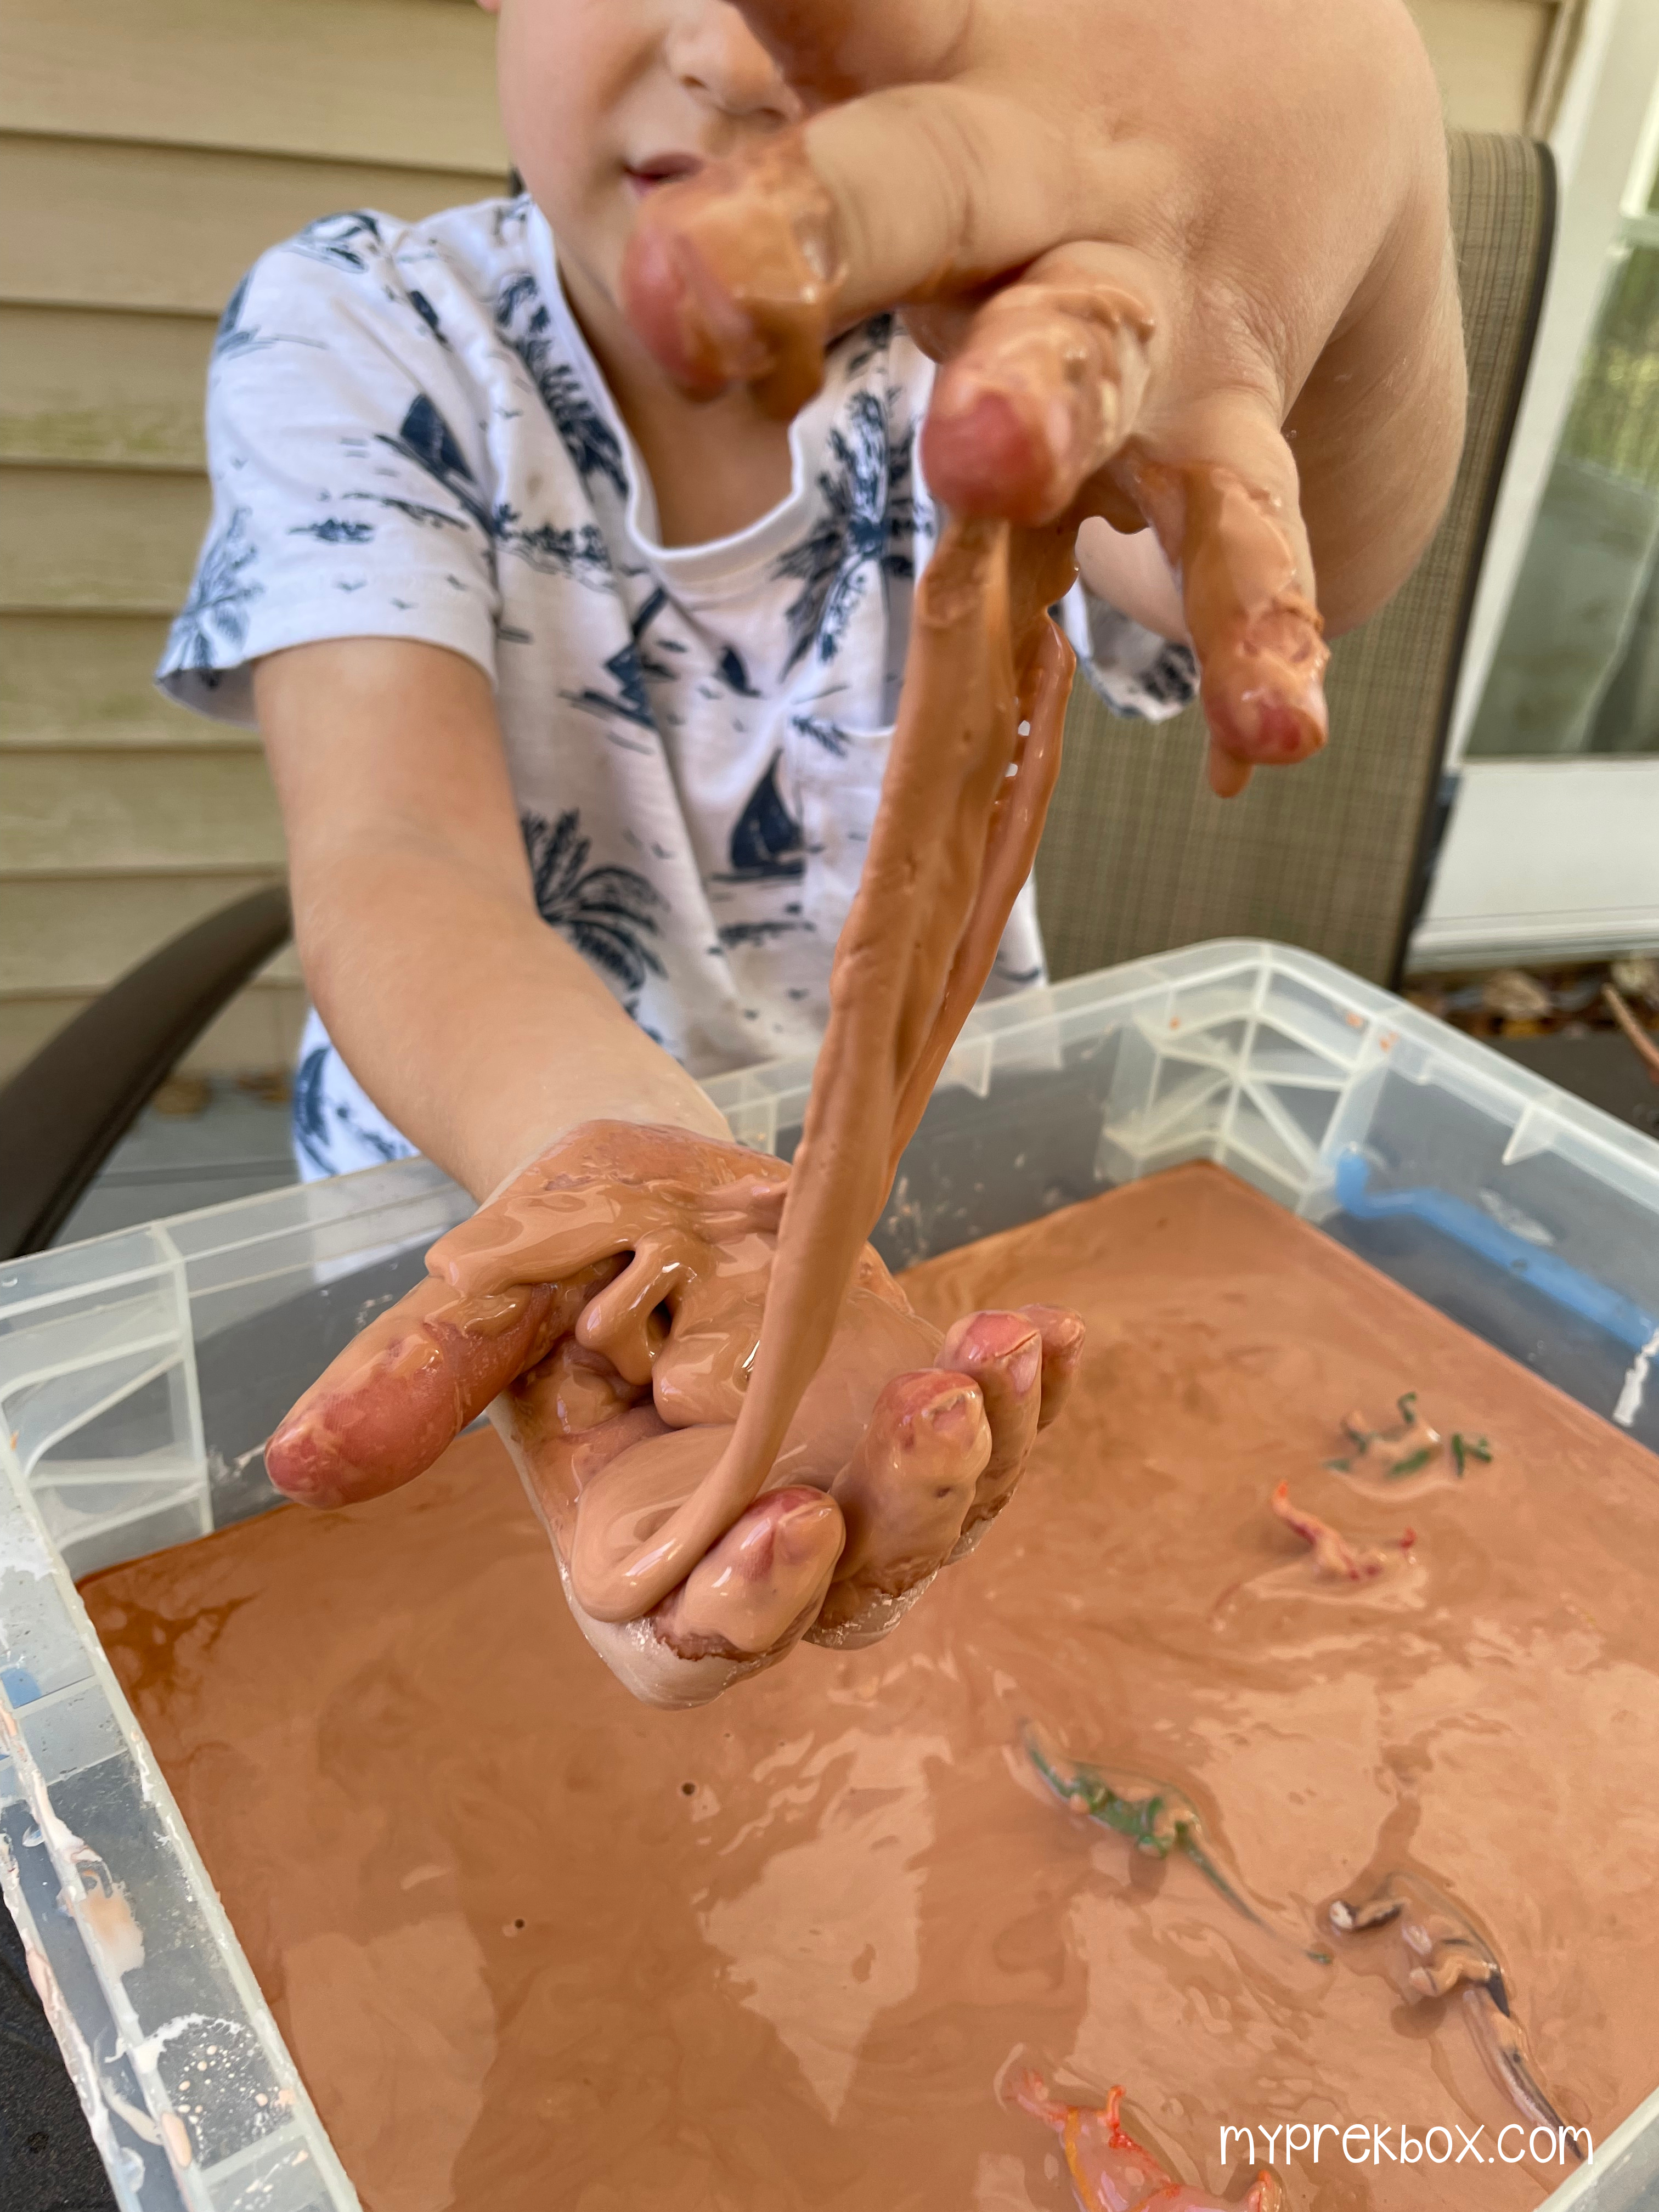 kid pulling apart quicksand mixture